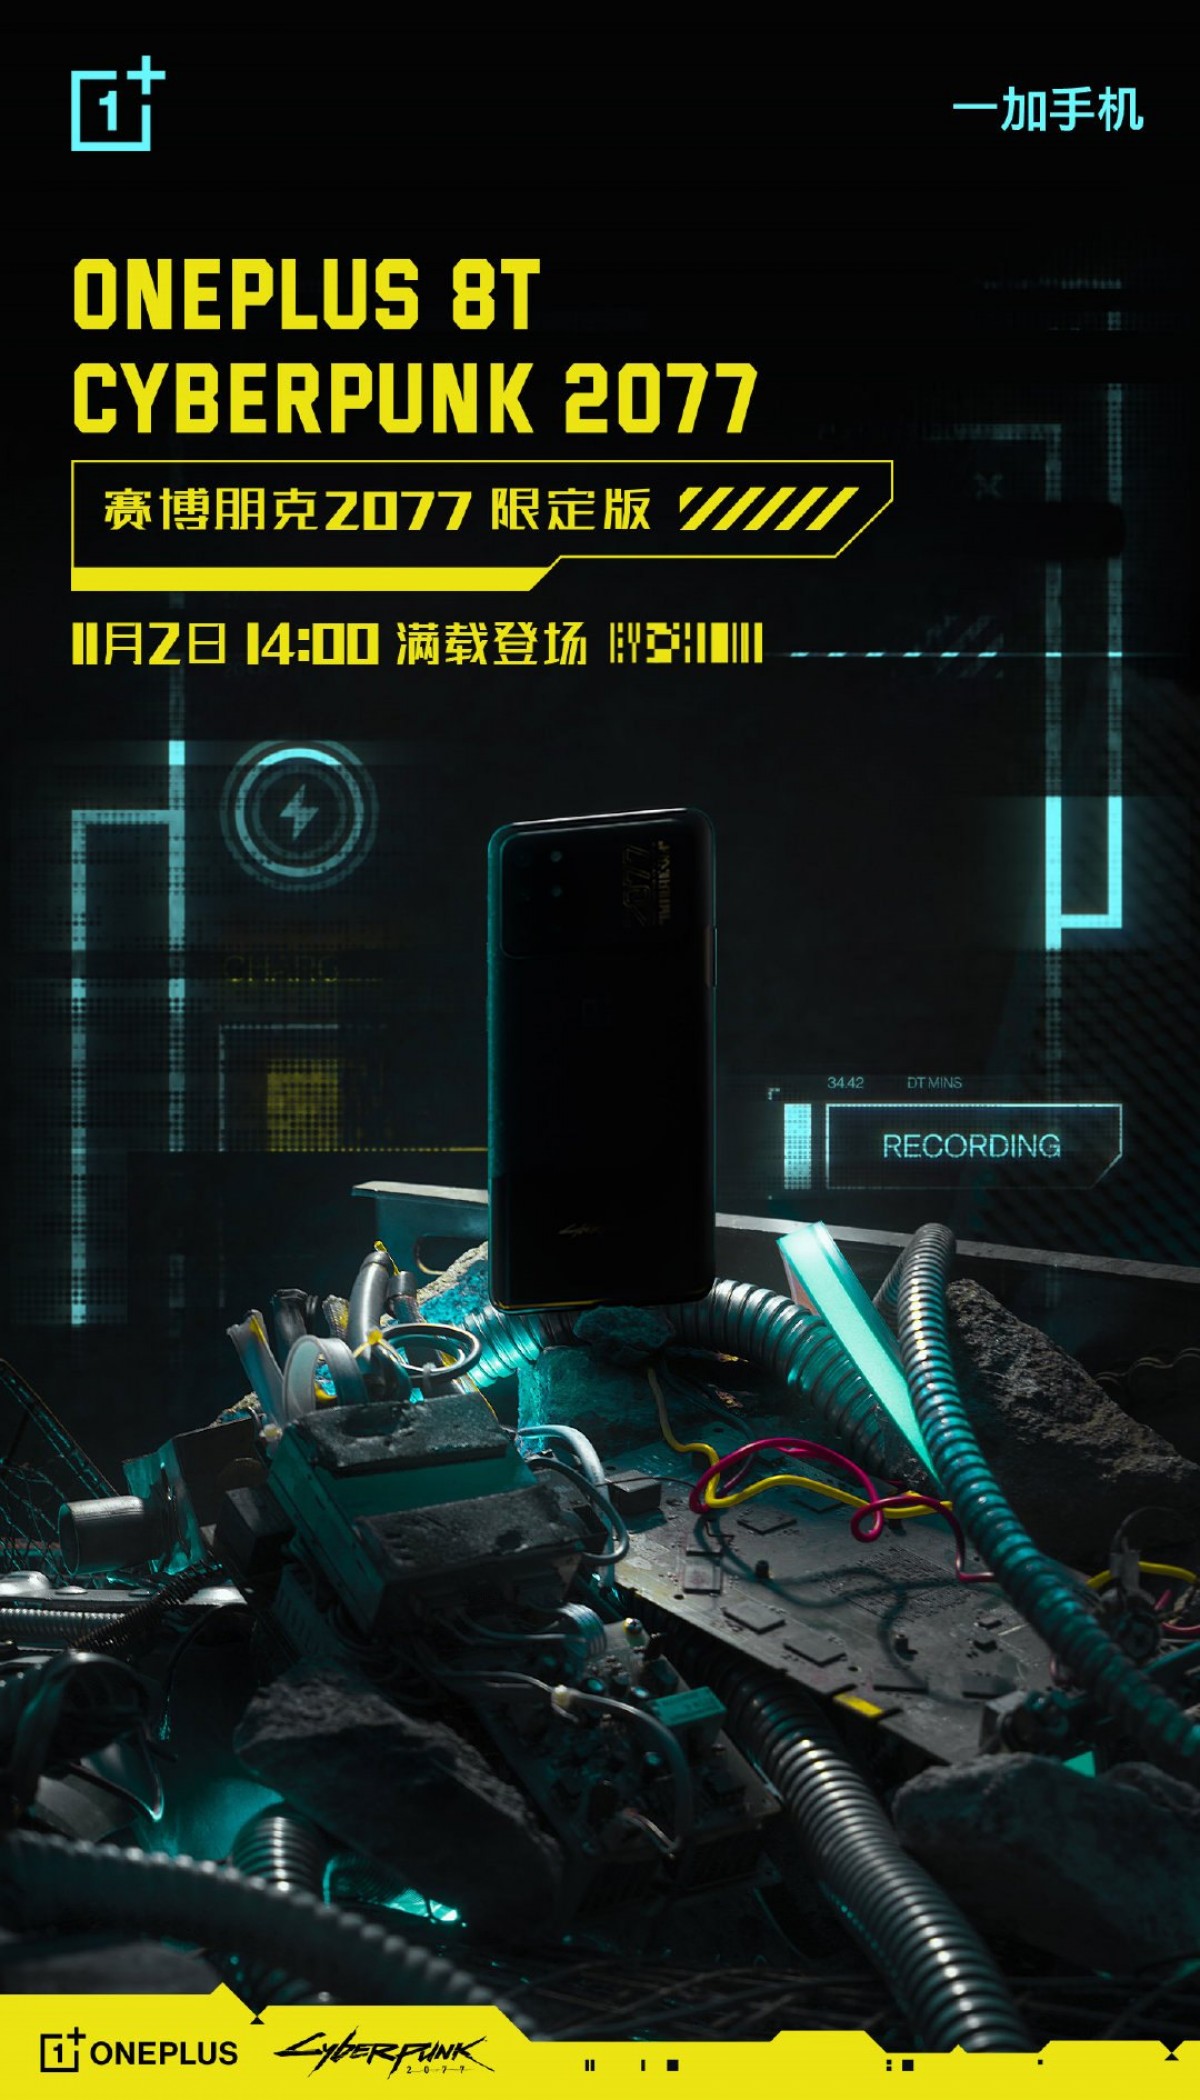 OnePlus 8T Cyberpunk 2077 Edition Teased